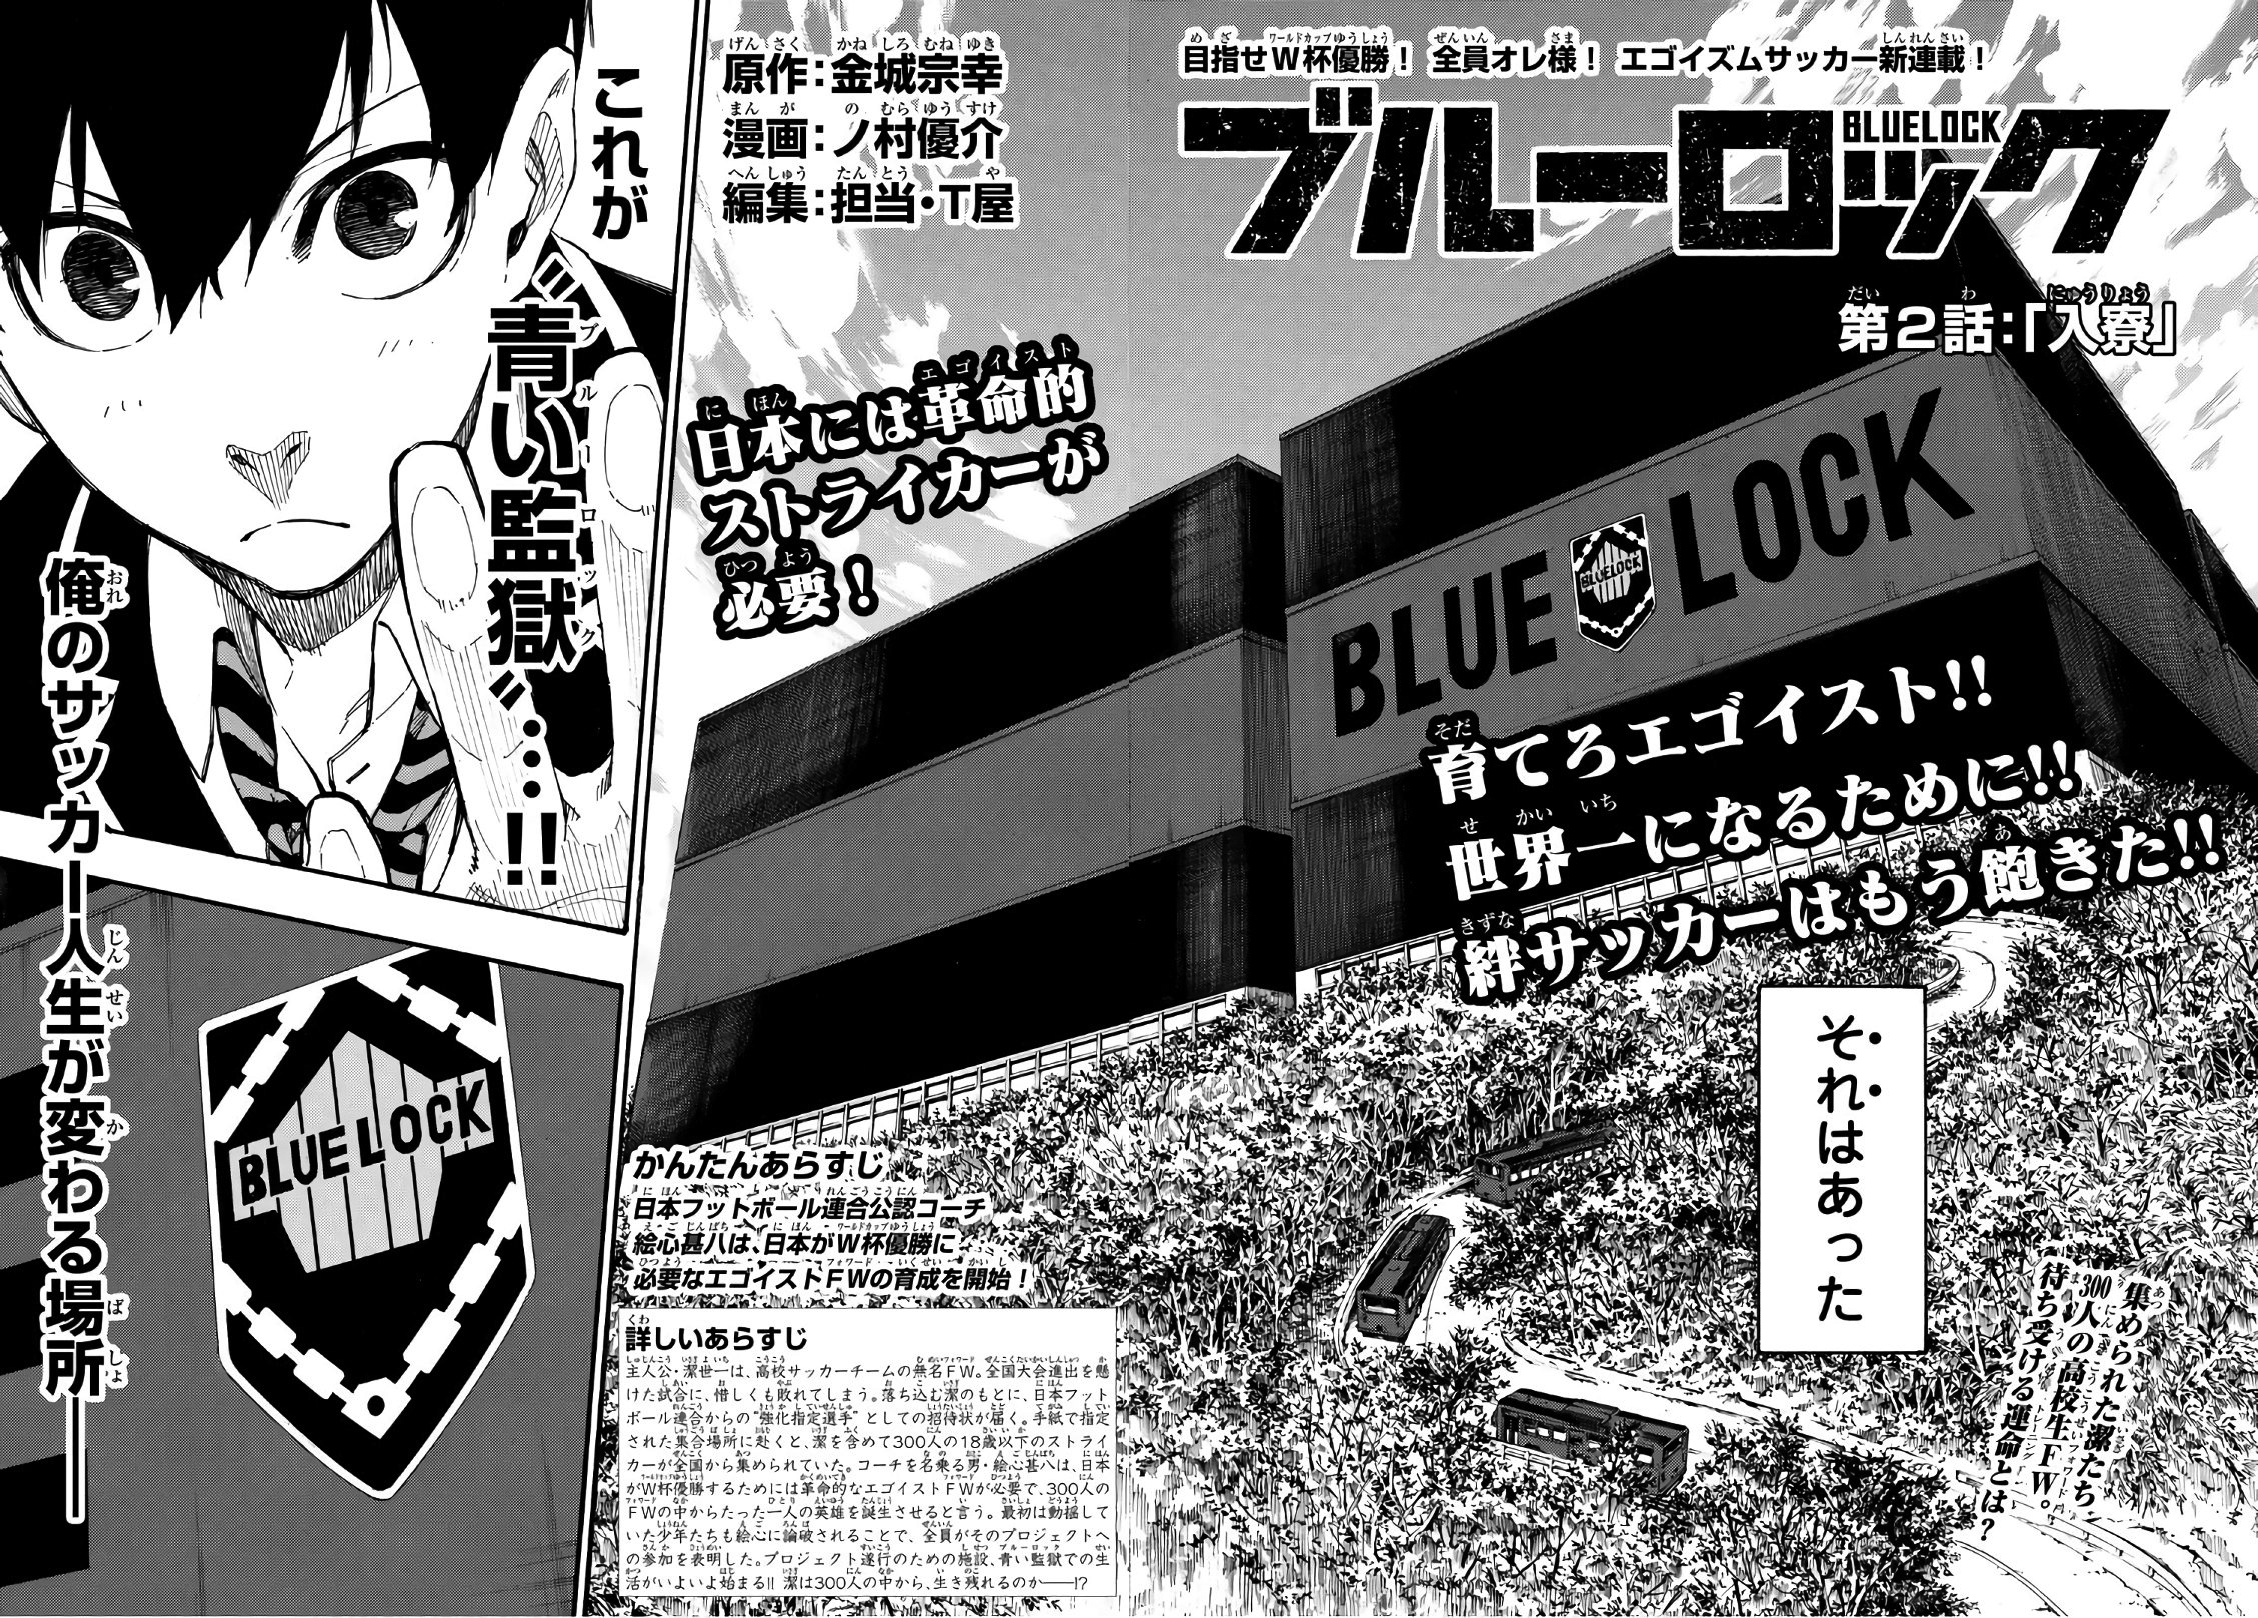 Blue Lock Episode 13 - Lose (HQ Cover) 